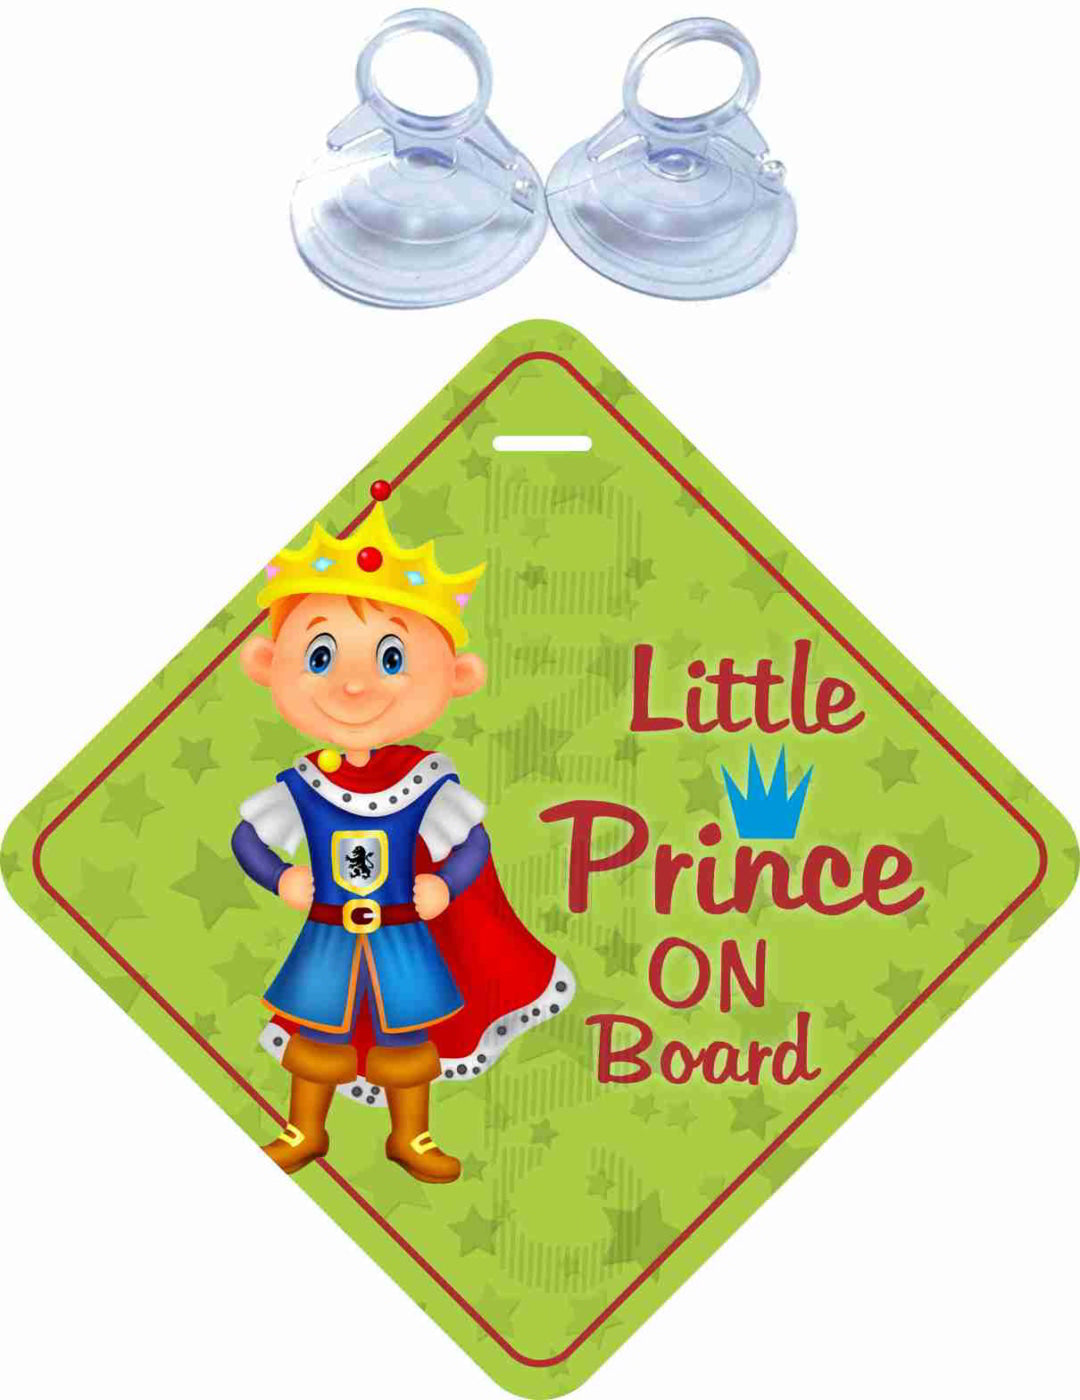 Little Prince on Board Safety Car Sticker